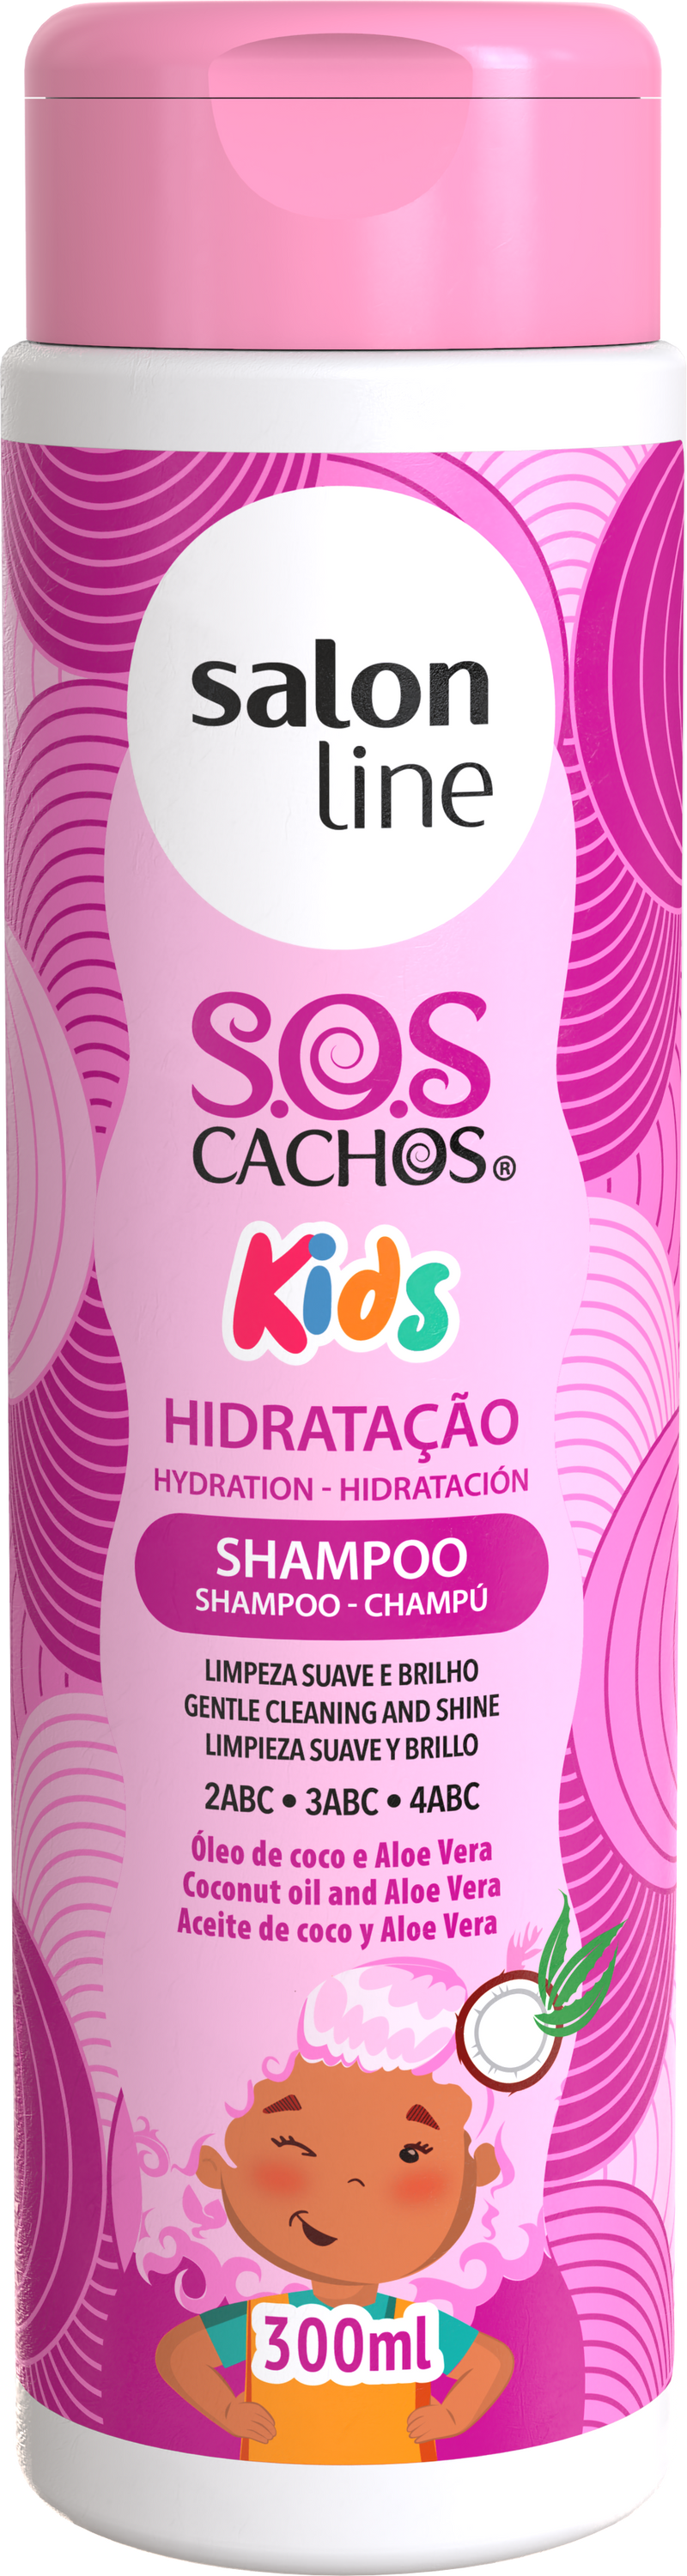 Salon Line S.O.S Cachos Kids Coconut and Aloe Vera Oil Hydration Shampoo 300ml Salon Line